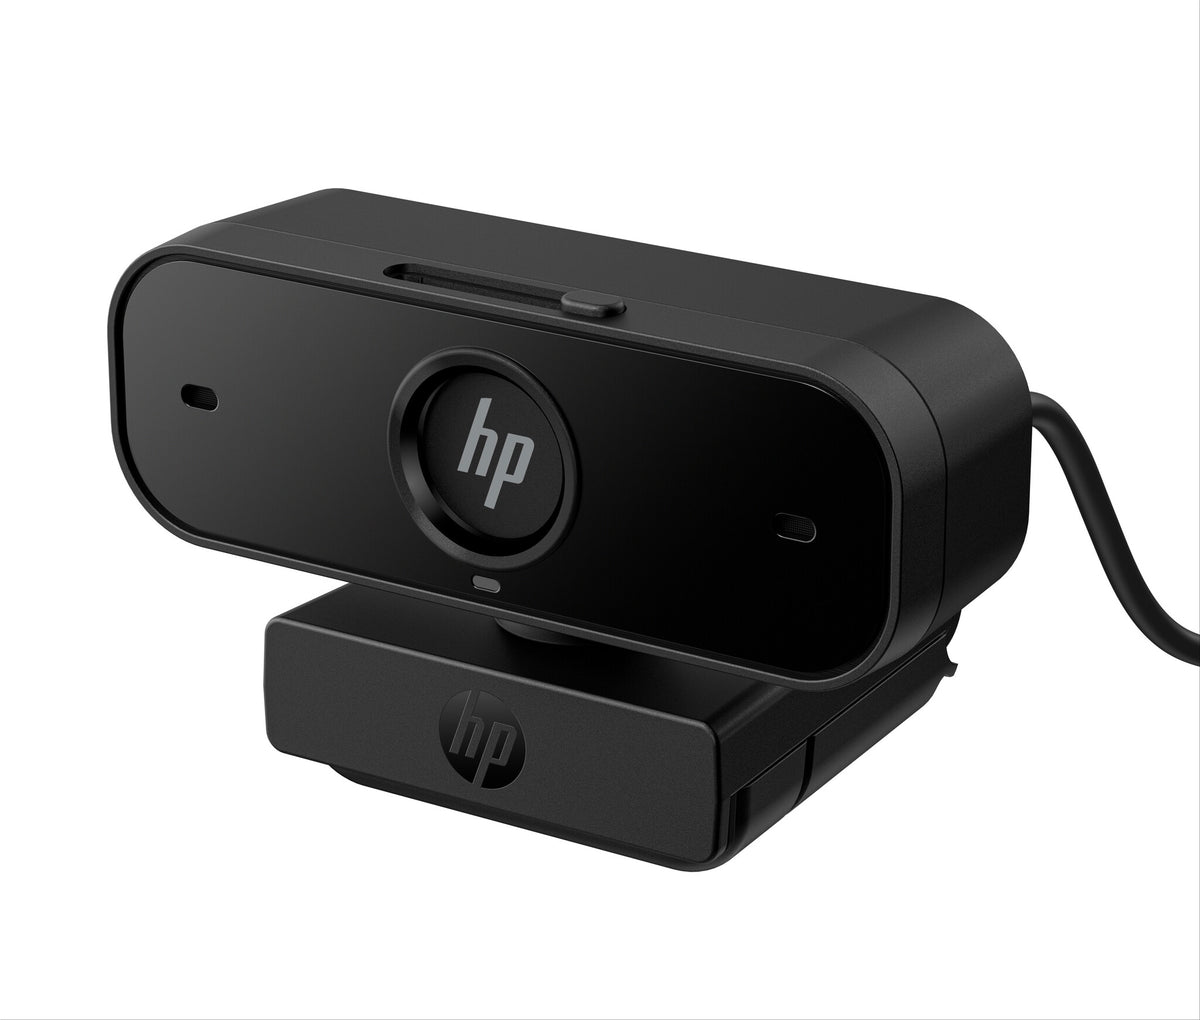 HP 435 - 2MP 1920 x 1080p webcam in Black